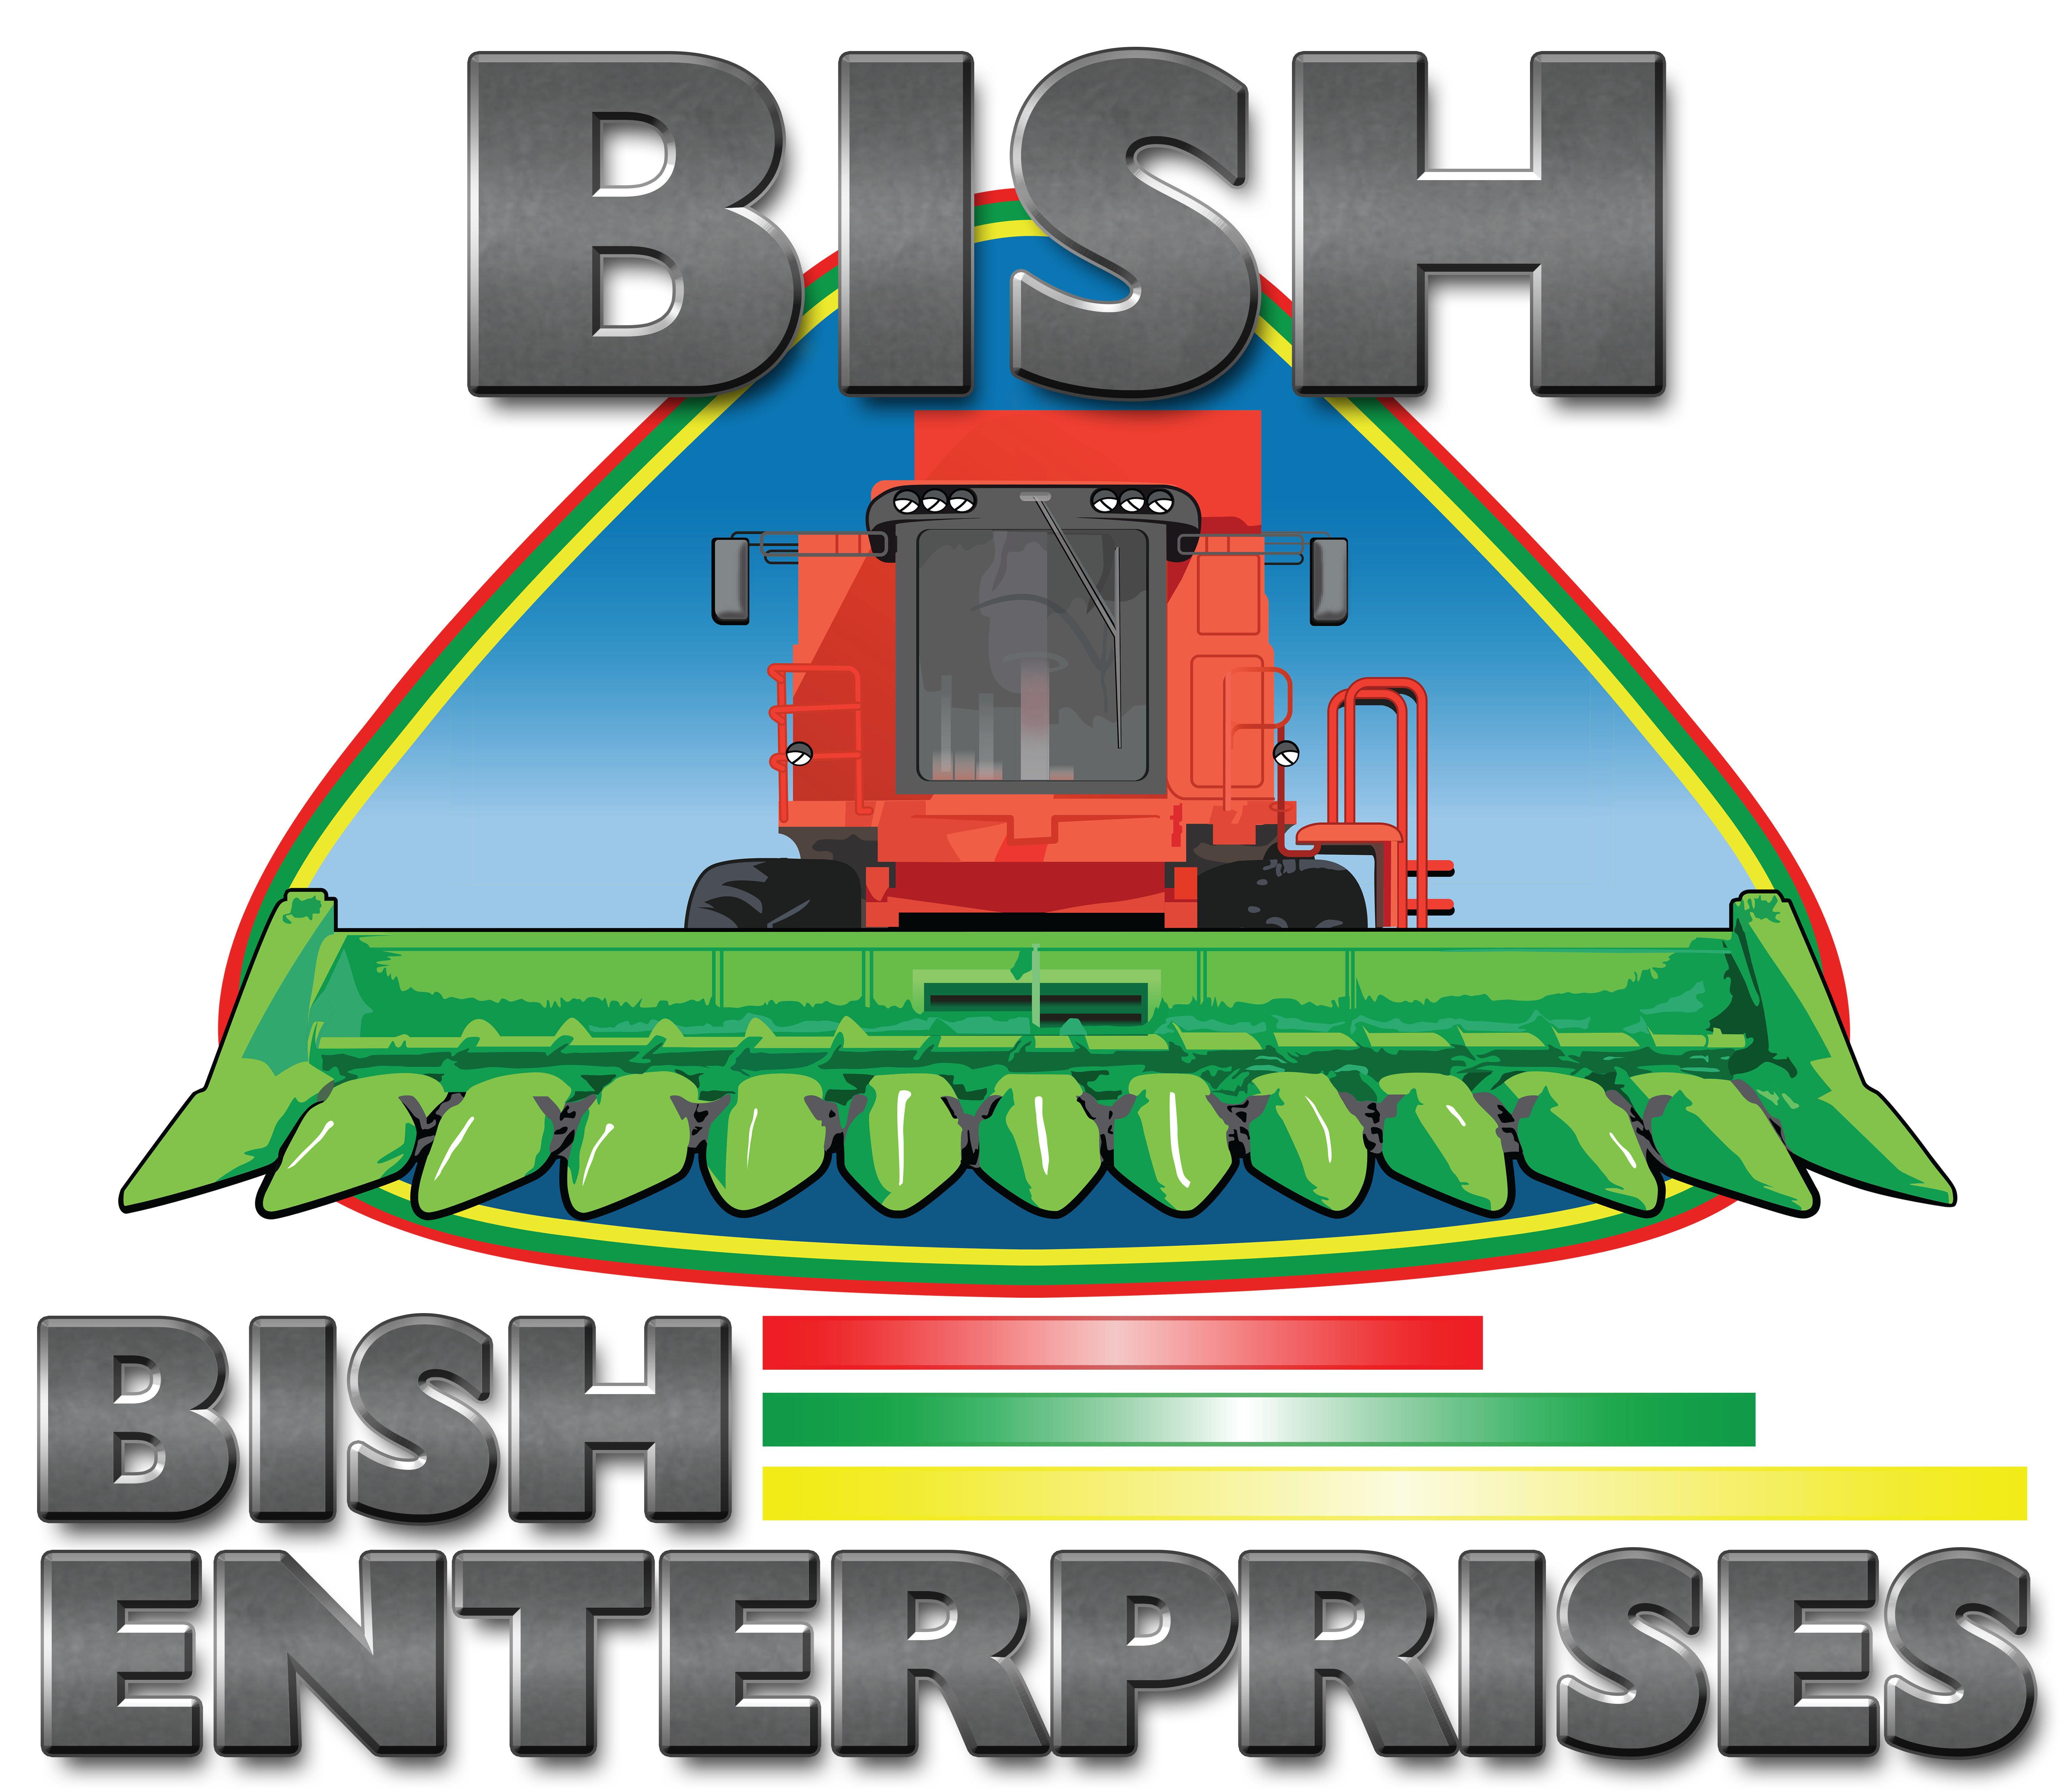 Bish Enterprises - Branding Guidelines Correct